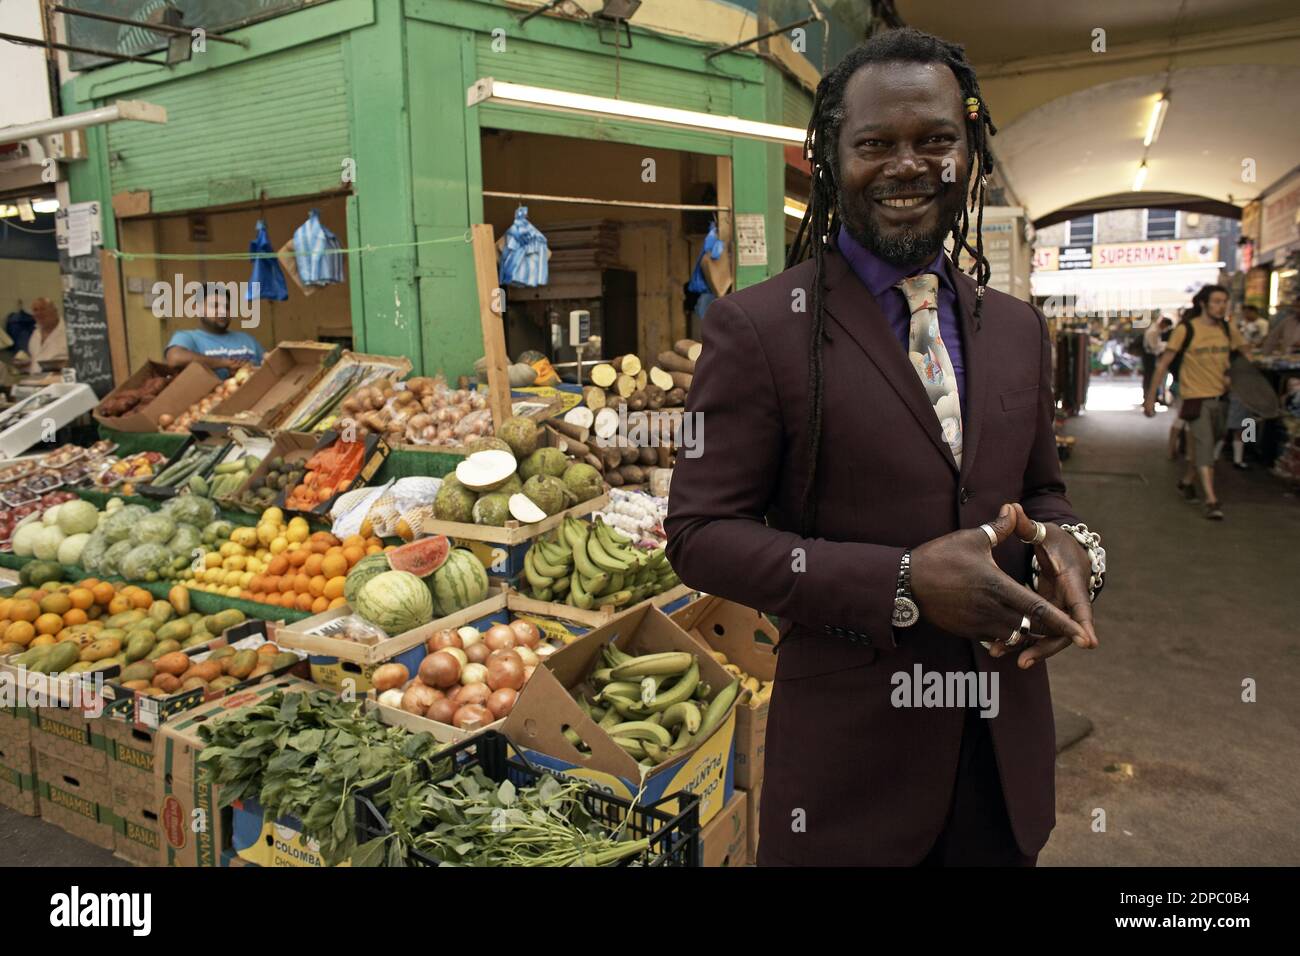 Levi Roots, Musiker, Koch, Unternehmer und Multimillionär. Fotografiert auf dem Brixton Markt. Stockfoto